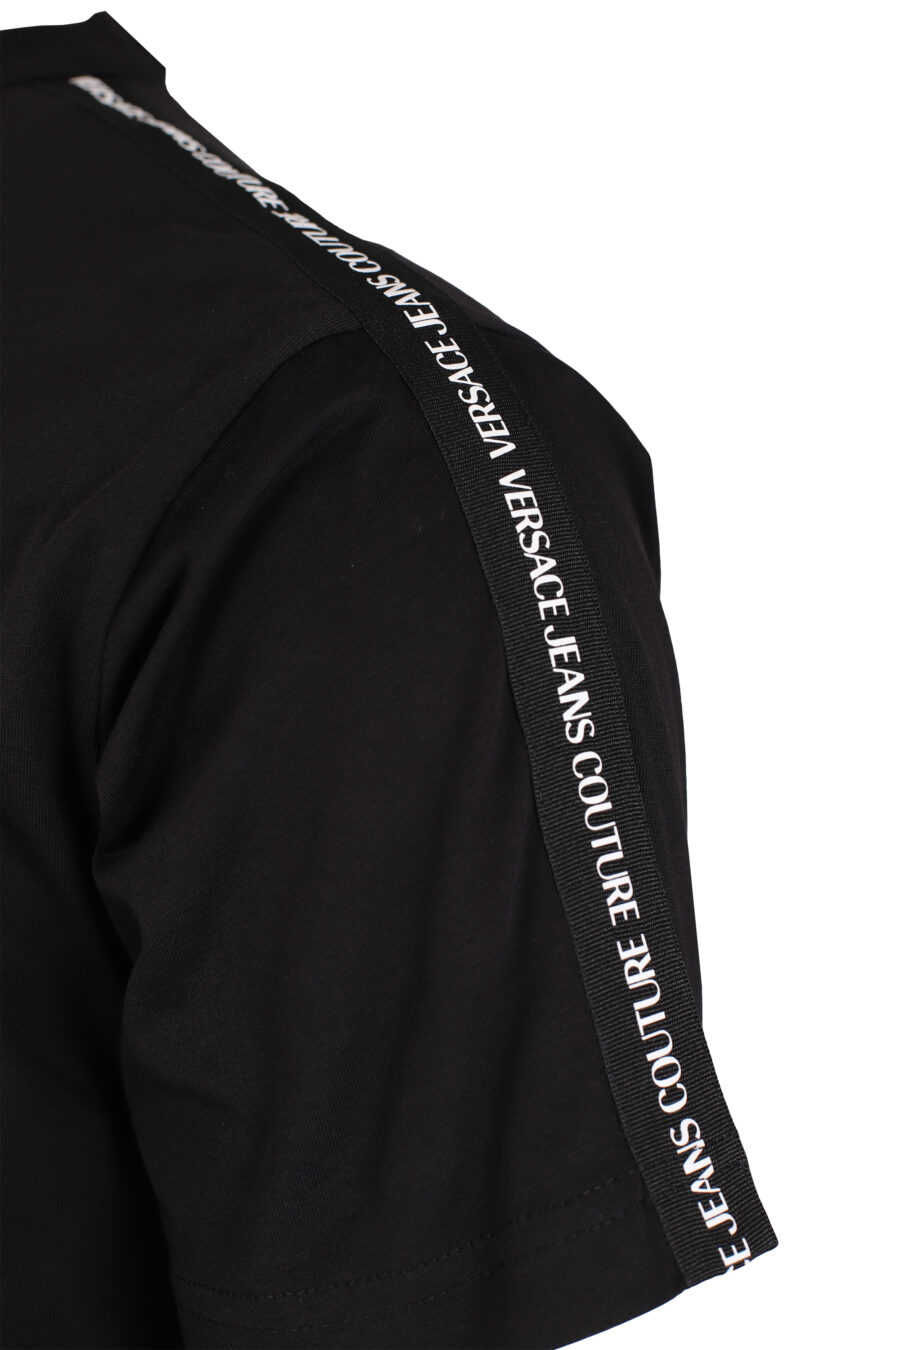 Black T-shirt with mini logo on shoulders - IMG 4013